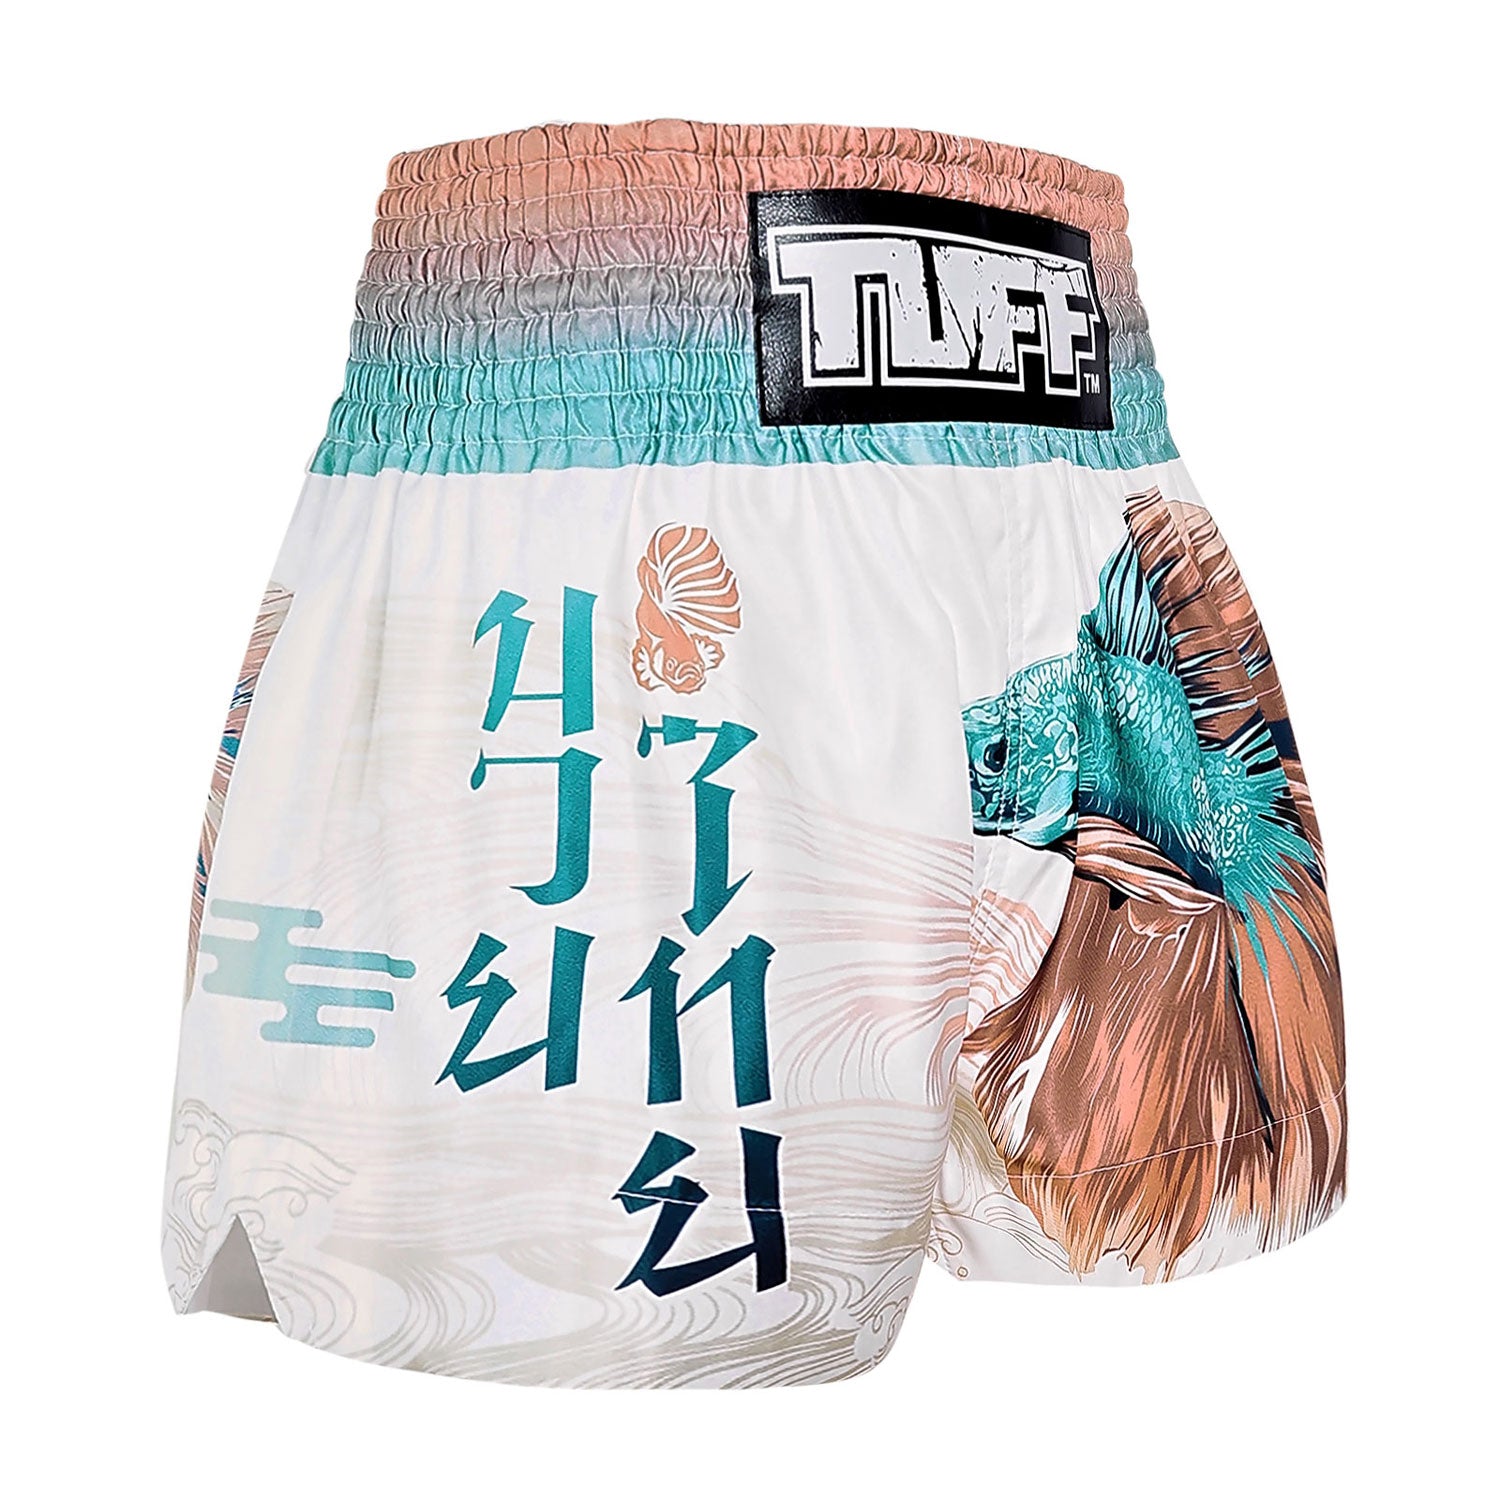 MS671 TUFF Muay Thai Shorts The Super Delta